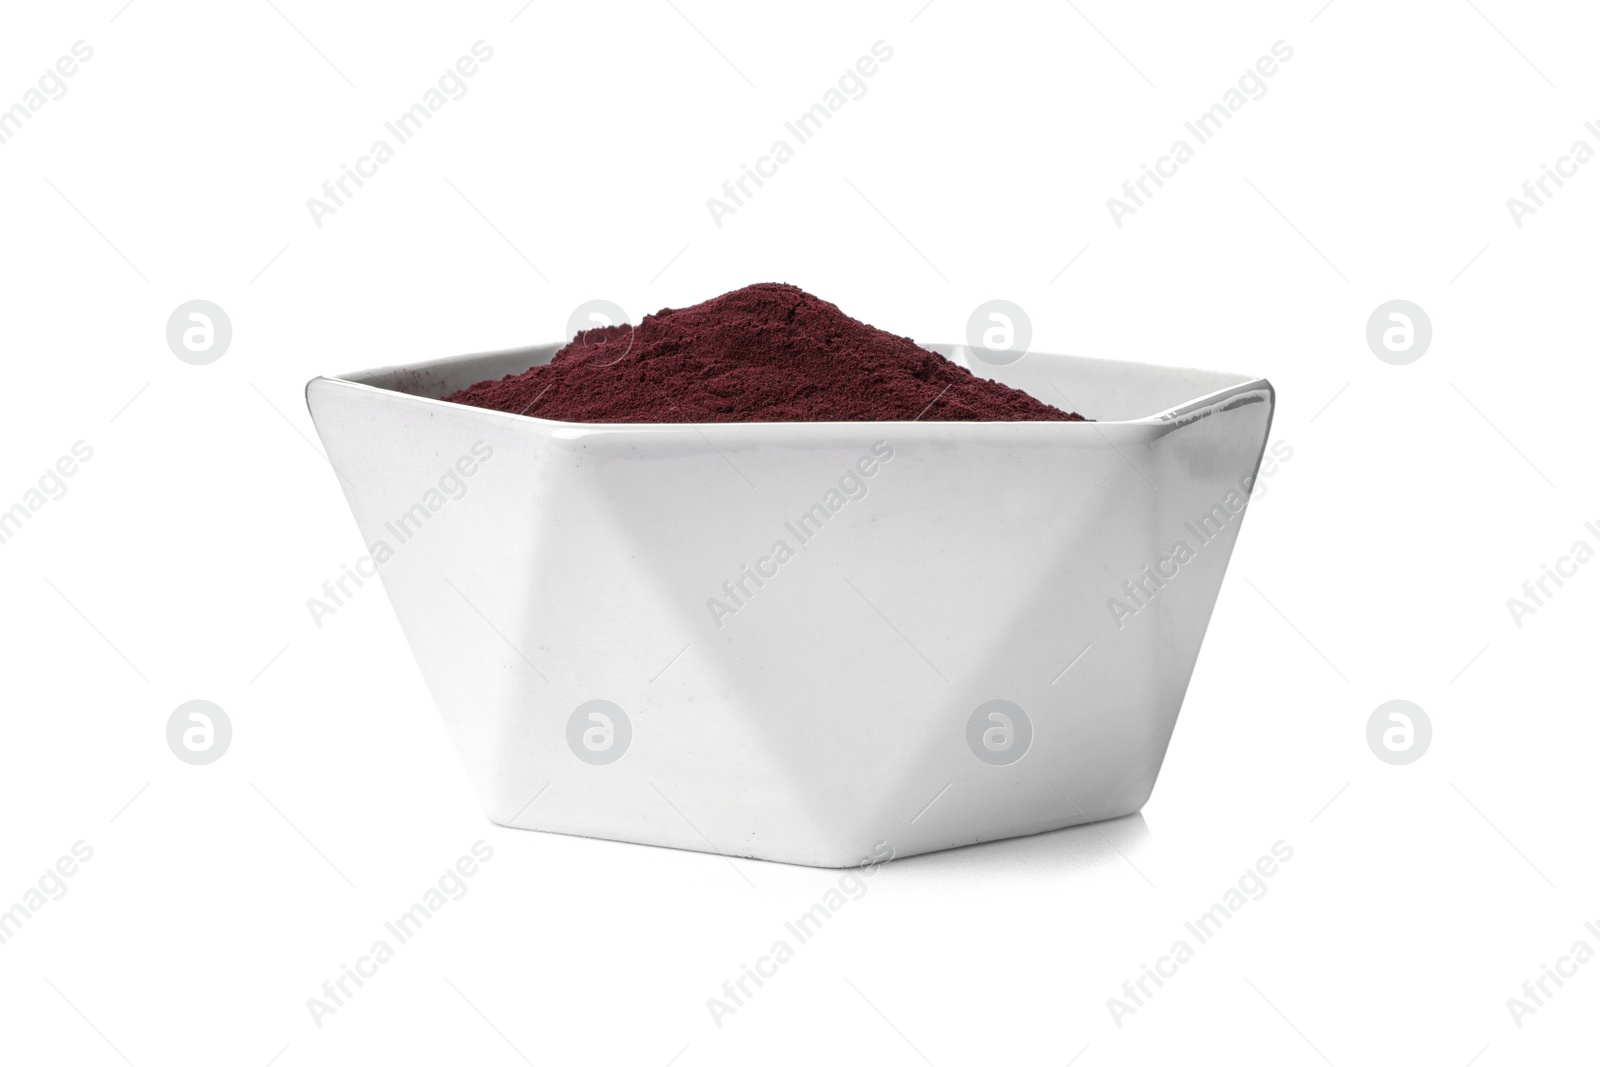 Photo of Bowl with acai powder on white background